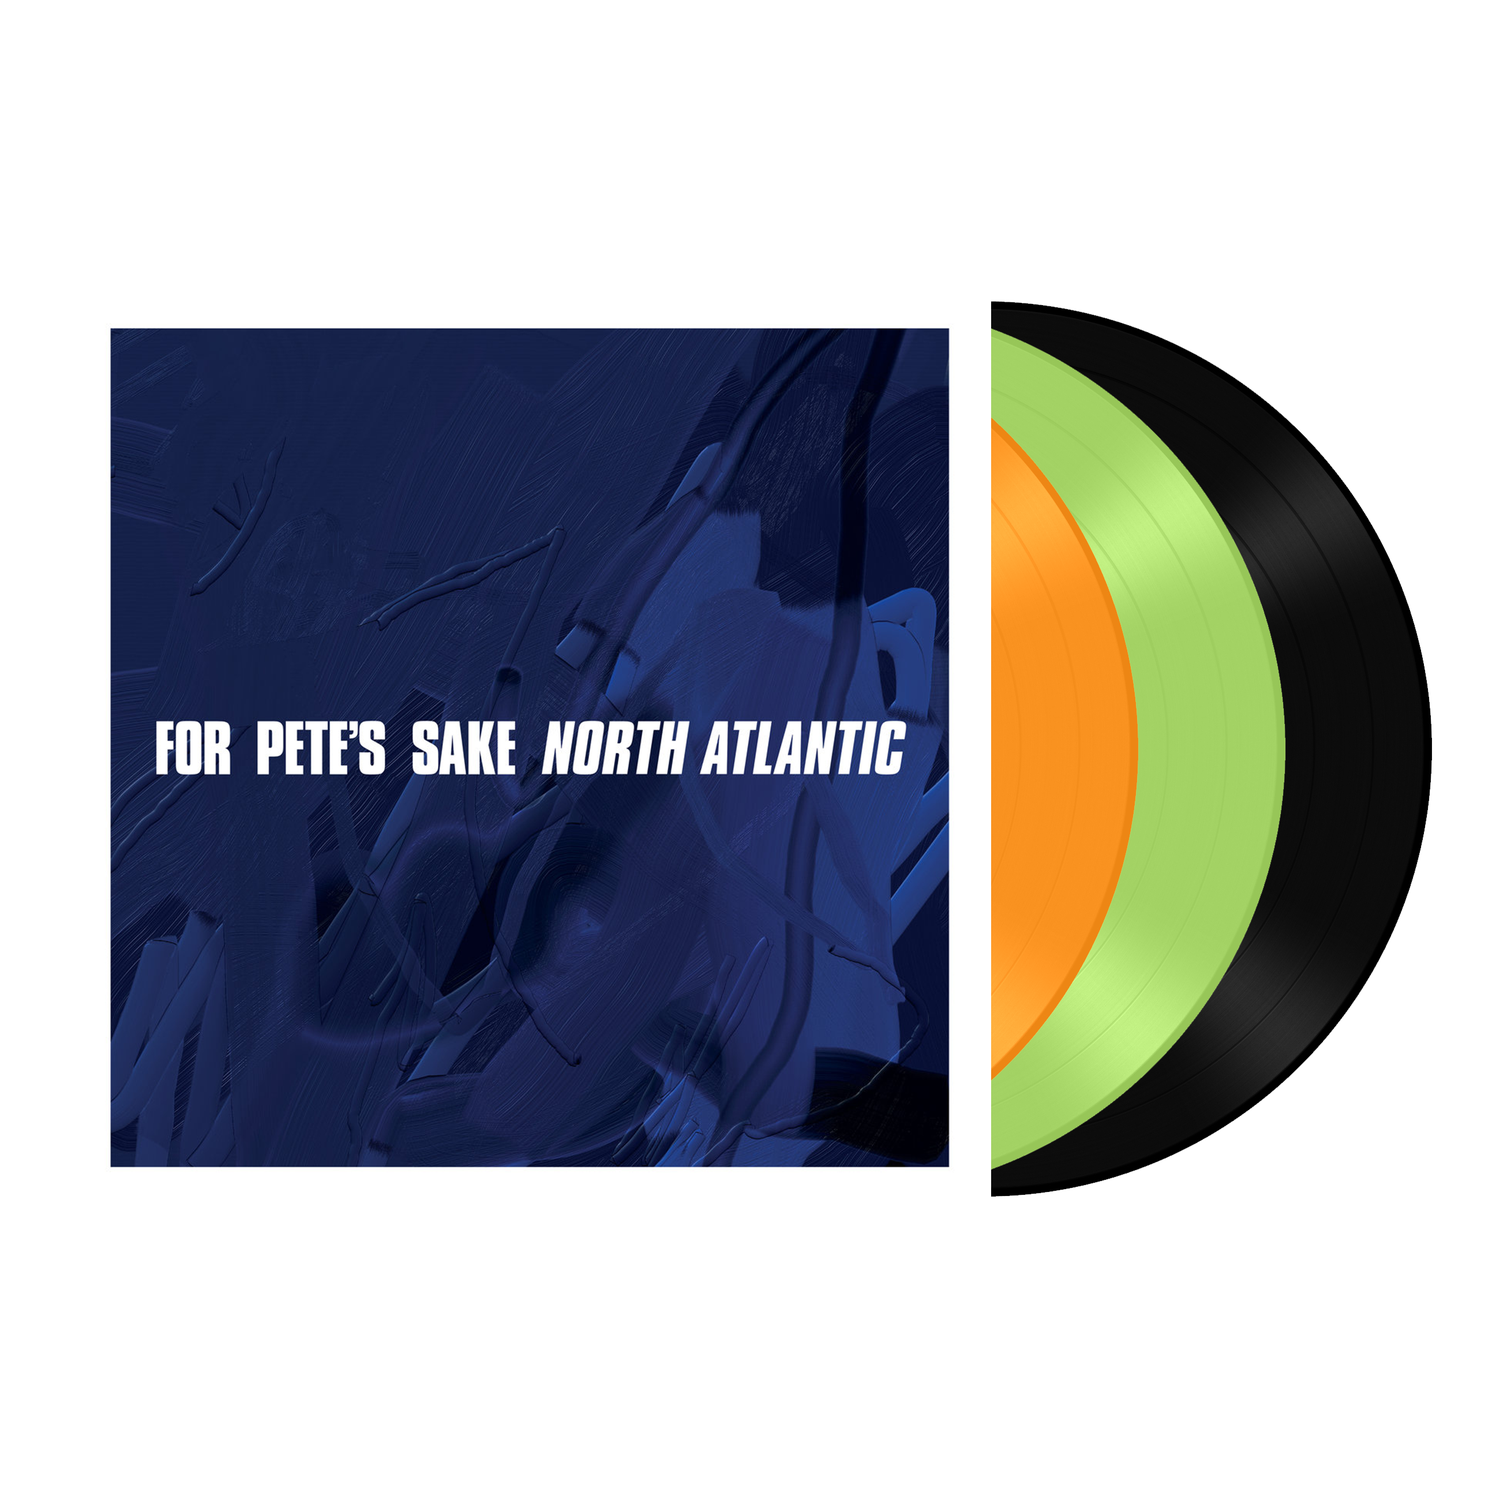 FOR PETE'S SAKE "North Atlantic"